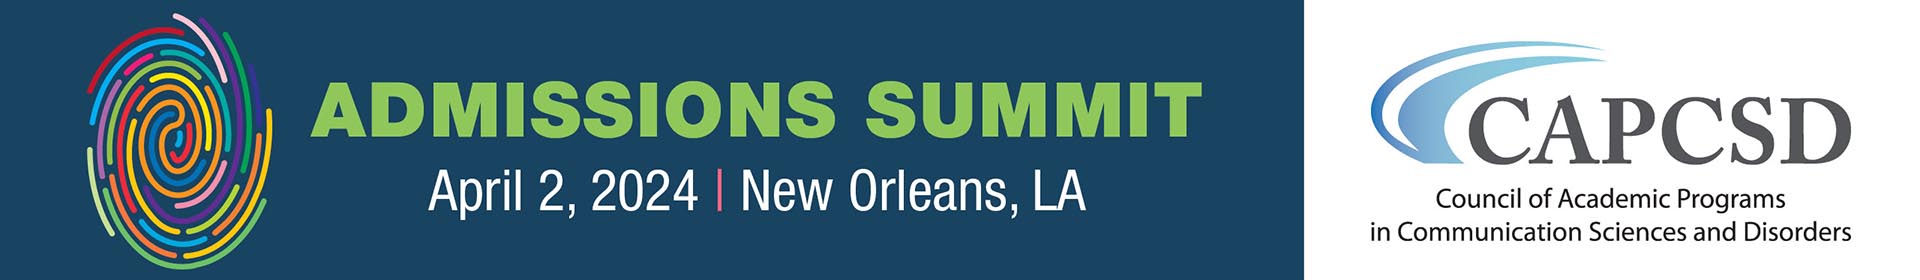 CAPCSD 2024 Admissions Summit banner, April 2, 2024, New Orleans, LA